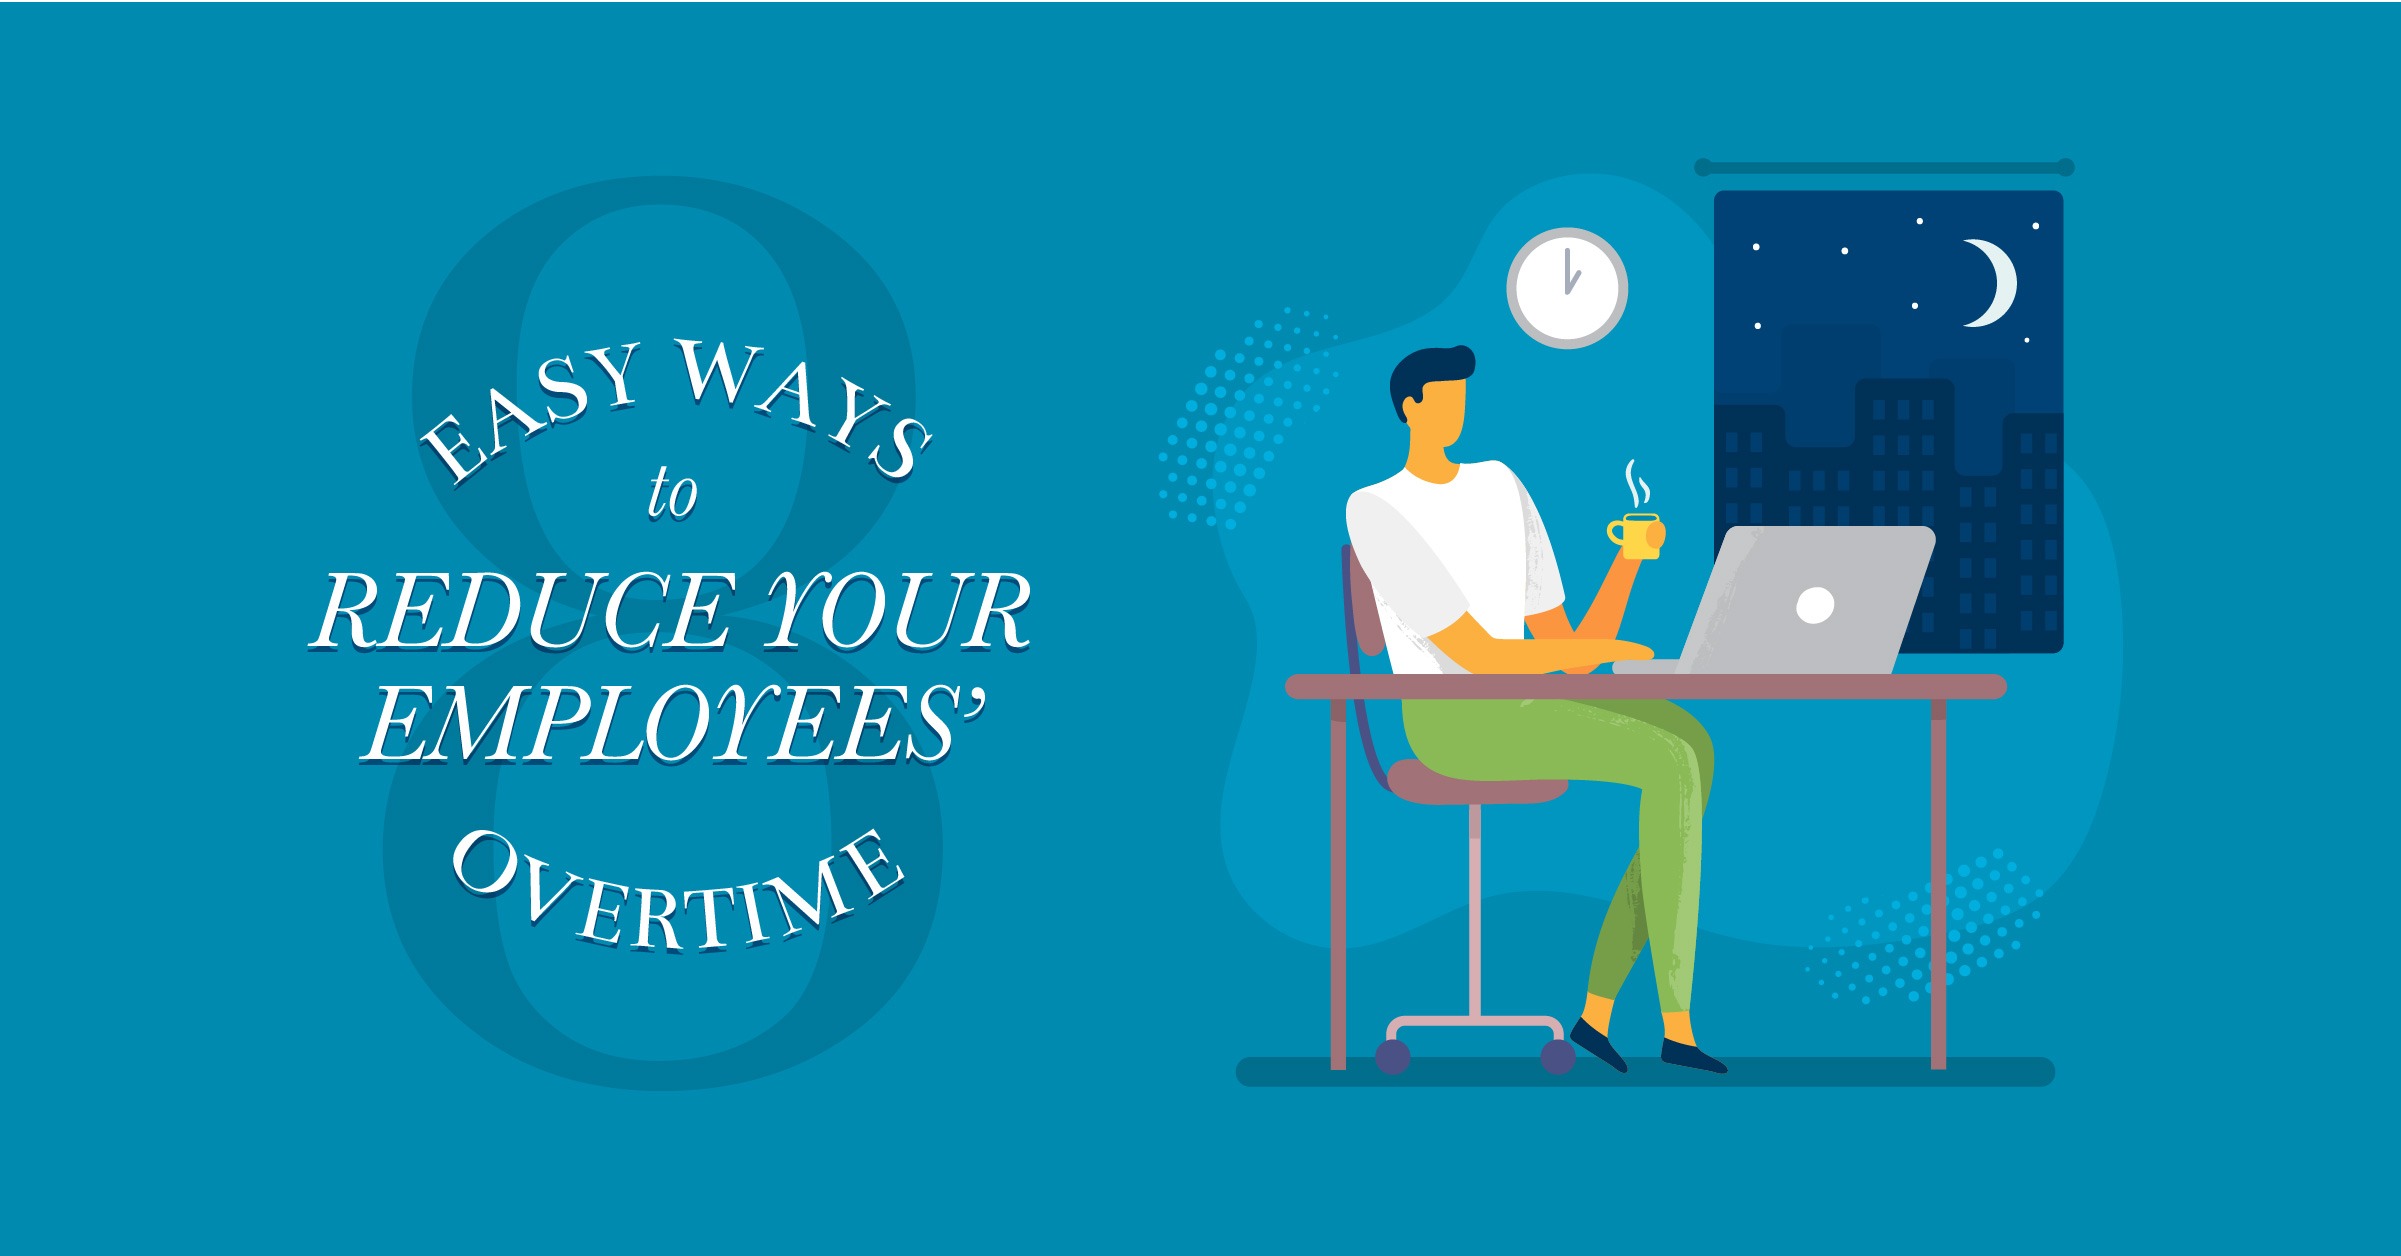 8 Ways to Reduce Employee Overtime